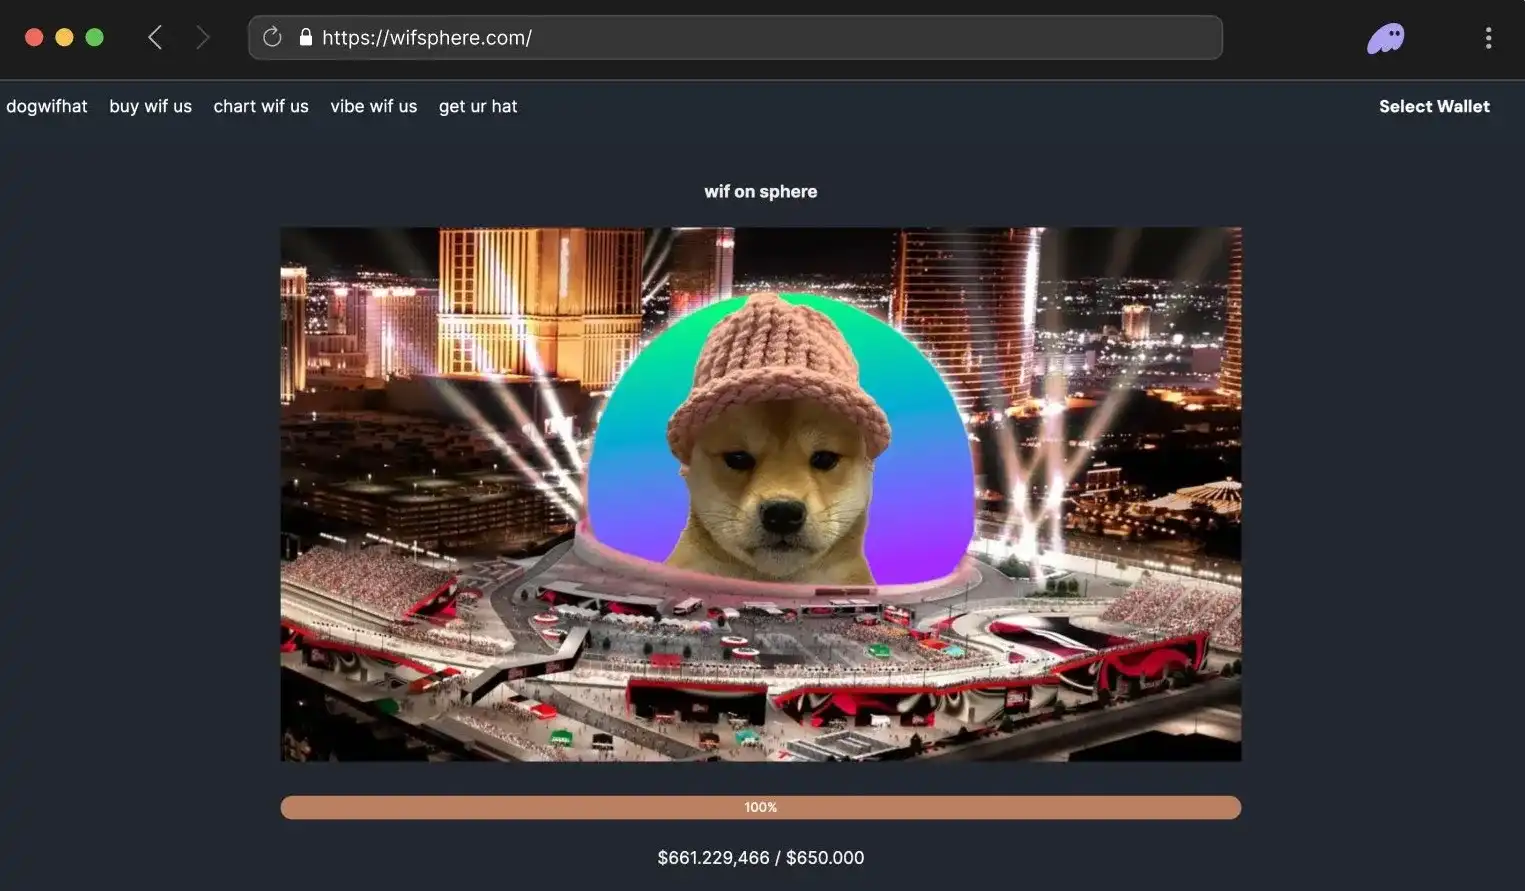 Dogwifhat (WIF) Raises $700K to Advertise on Las Vegas Sphere